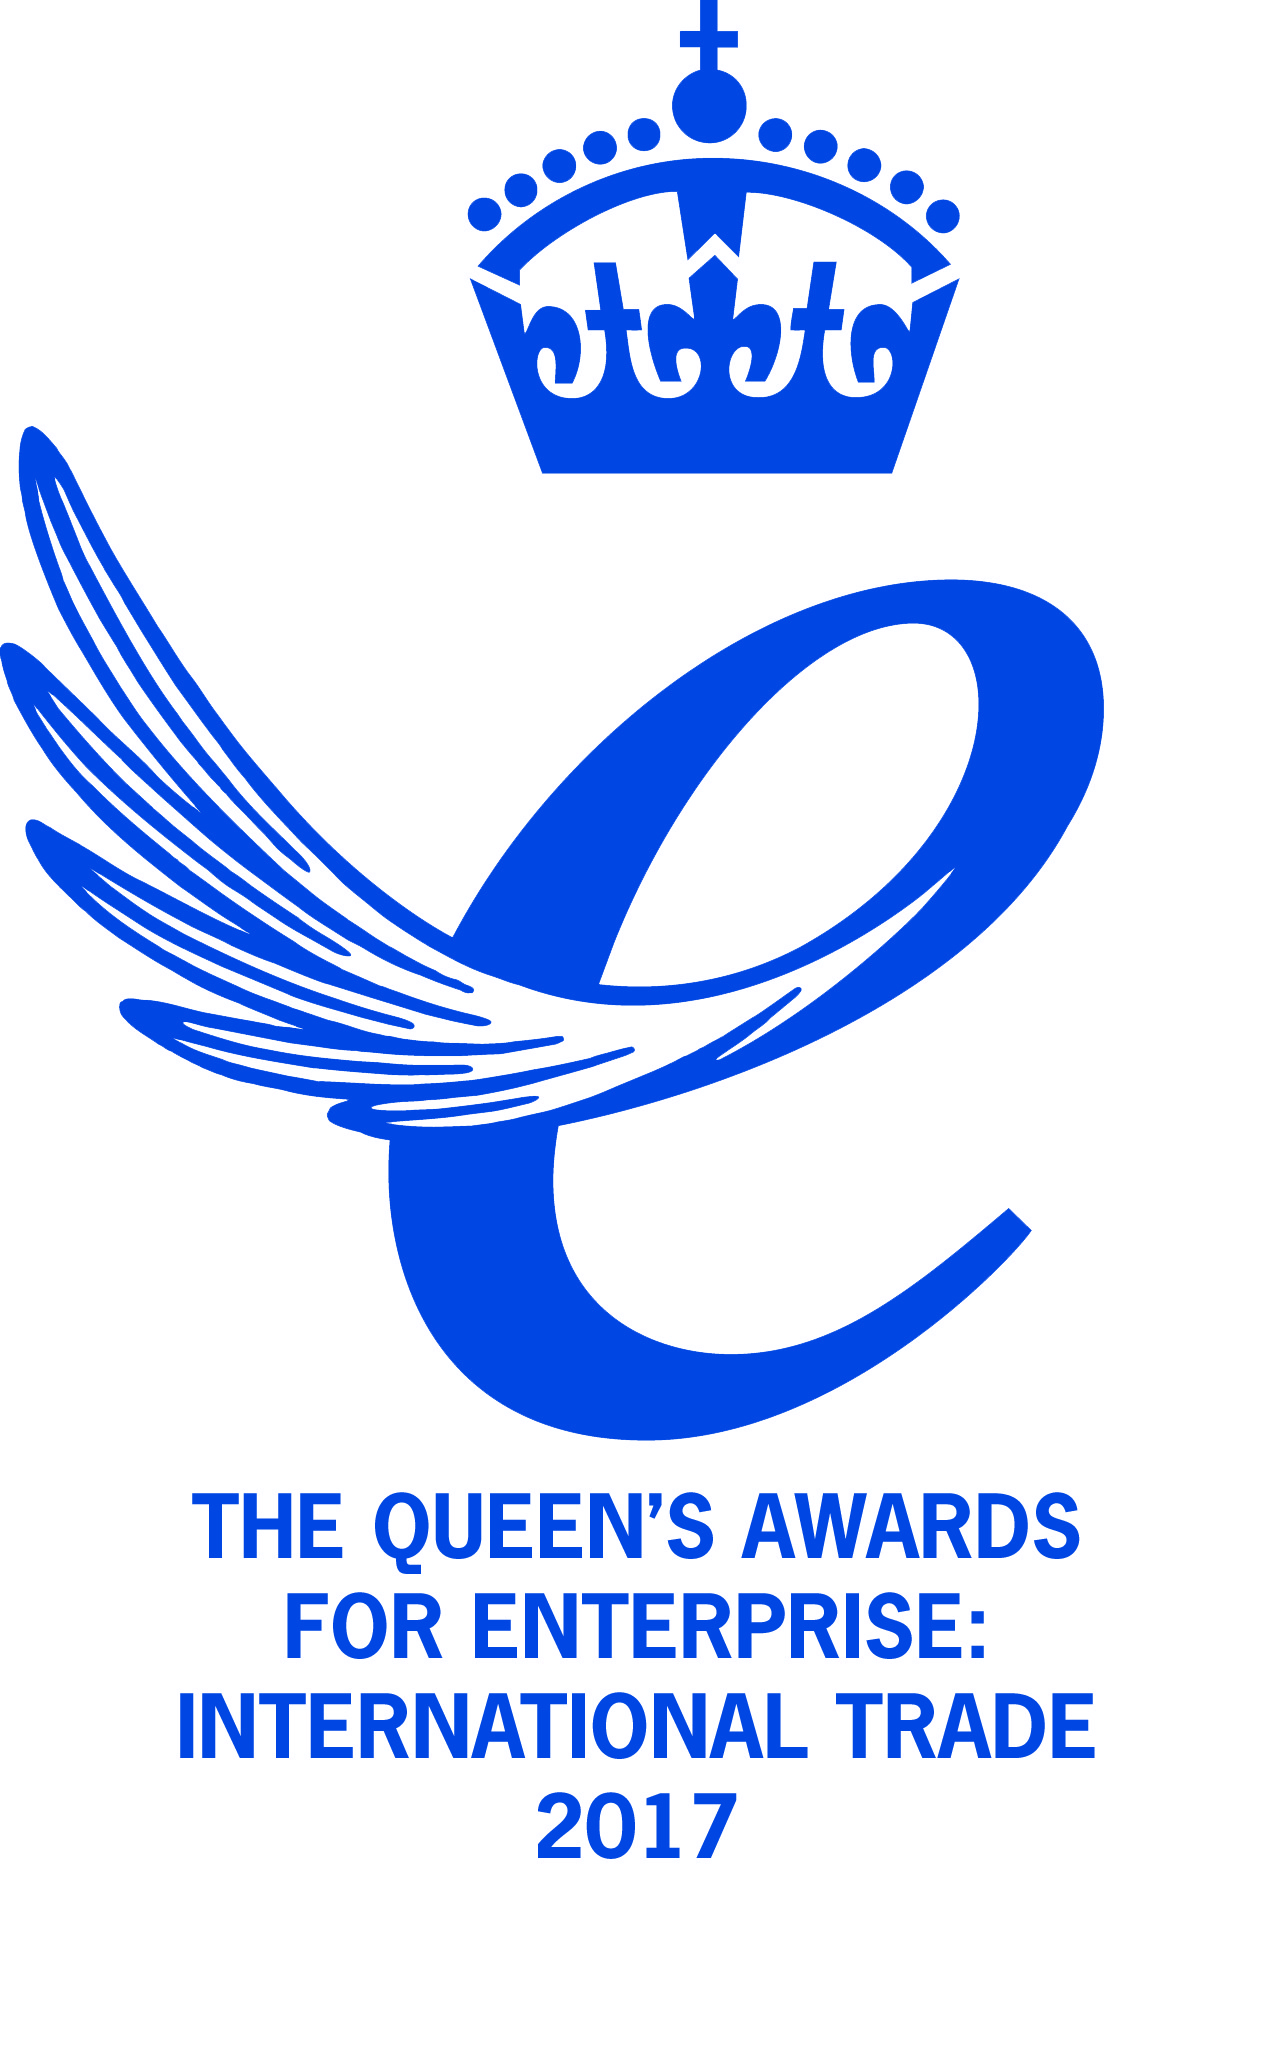 Logo for The Queen's Awards for Enterprise: International Trade 2010